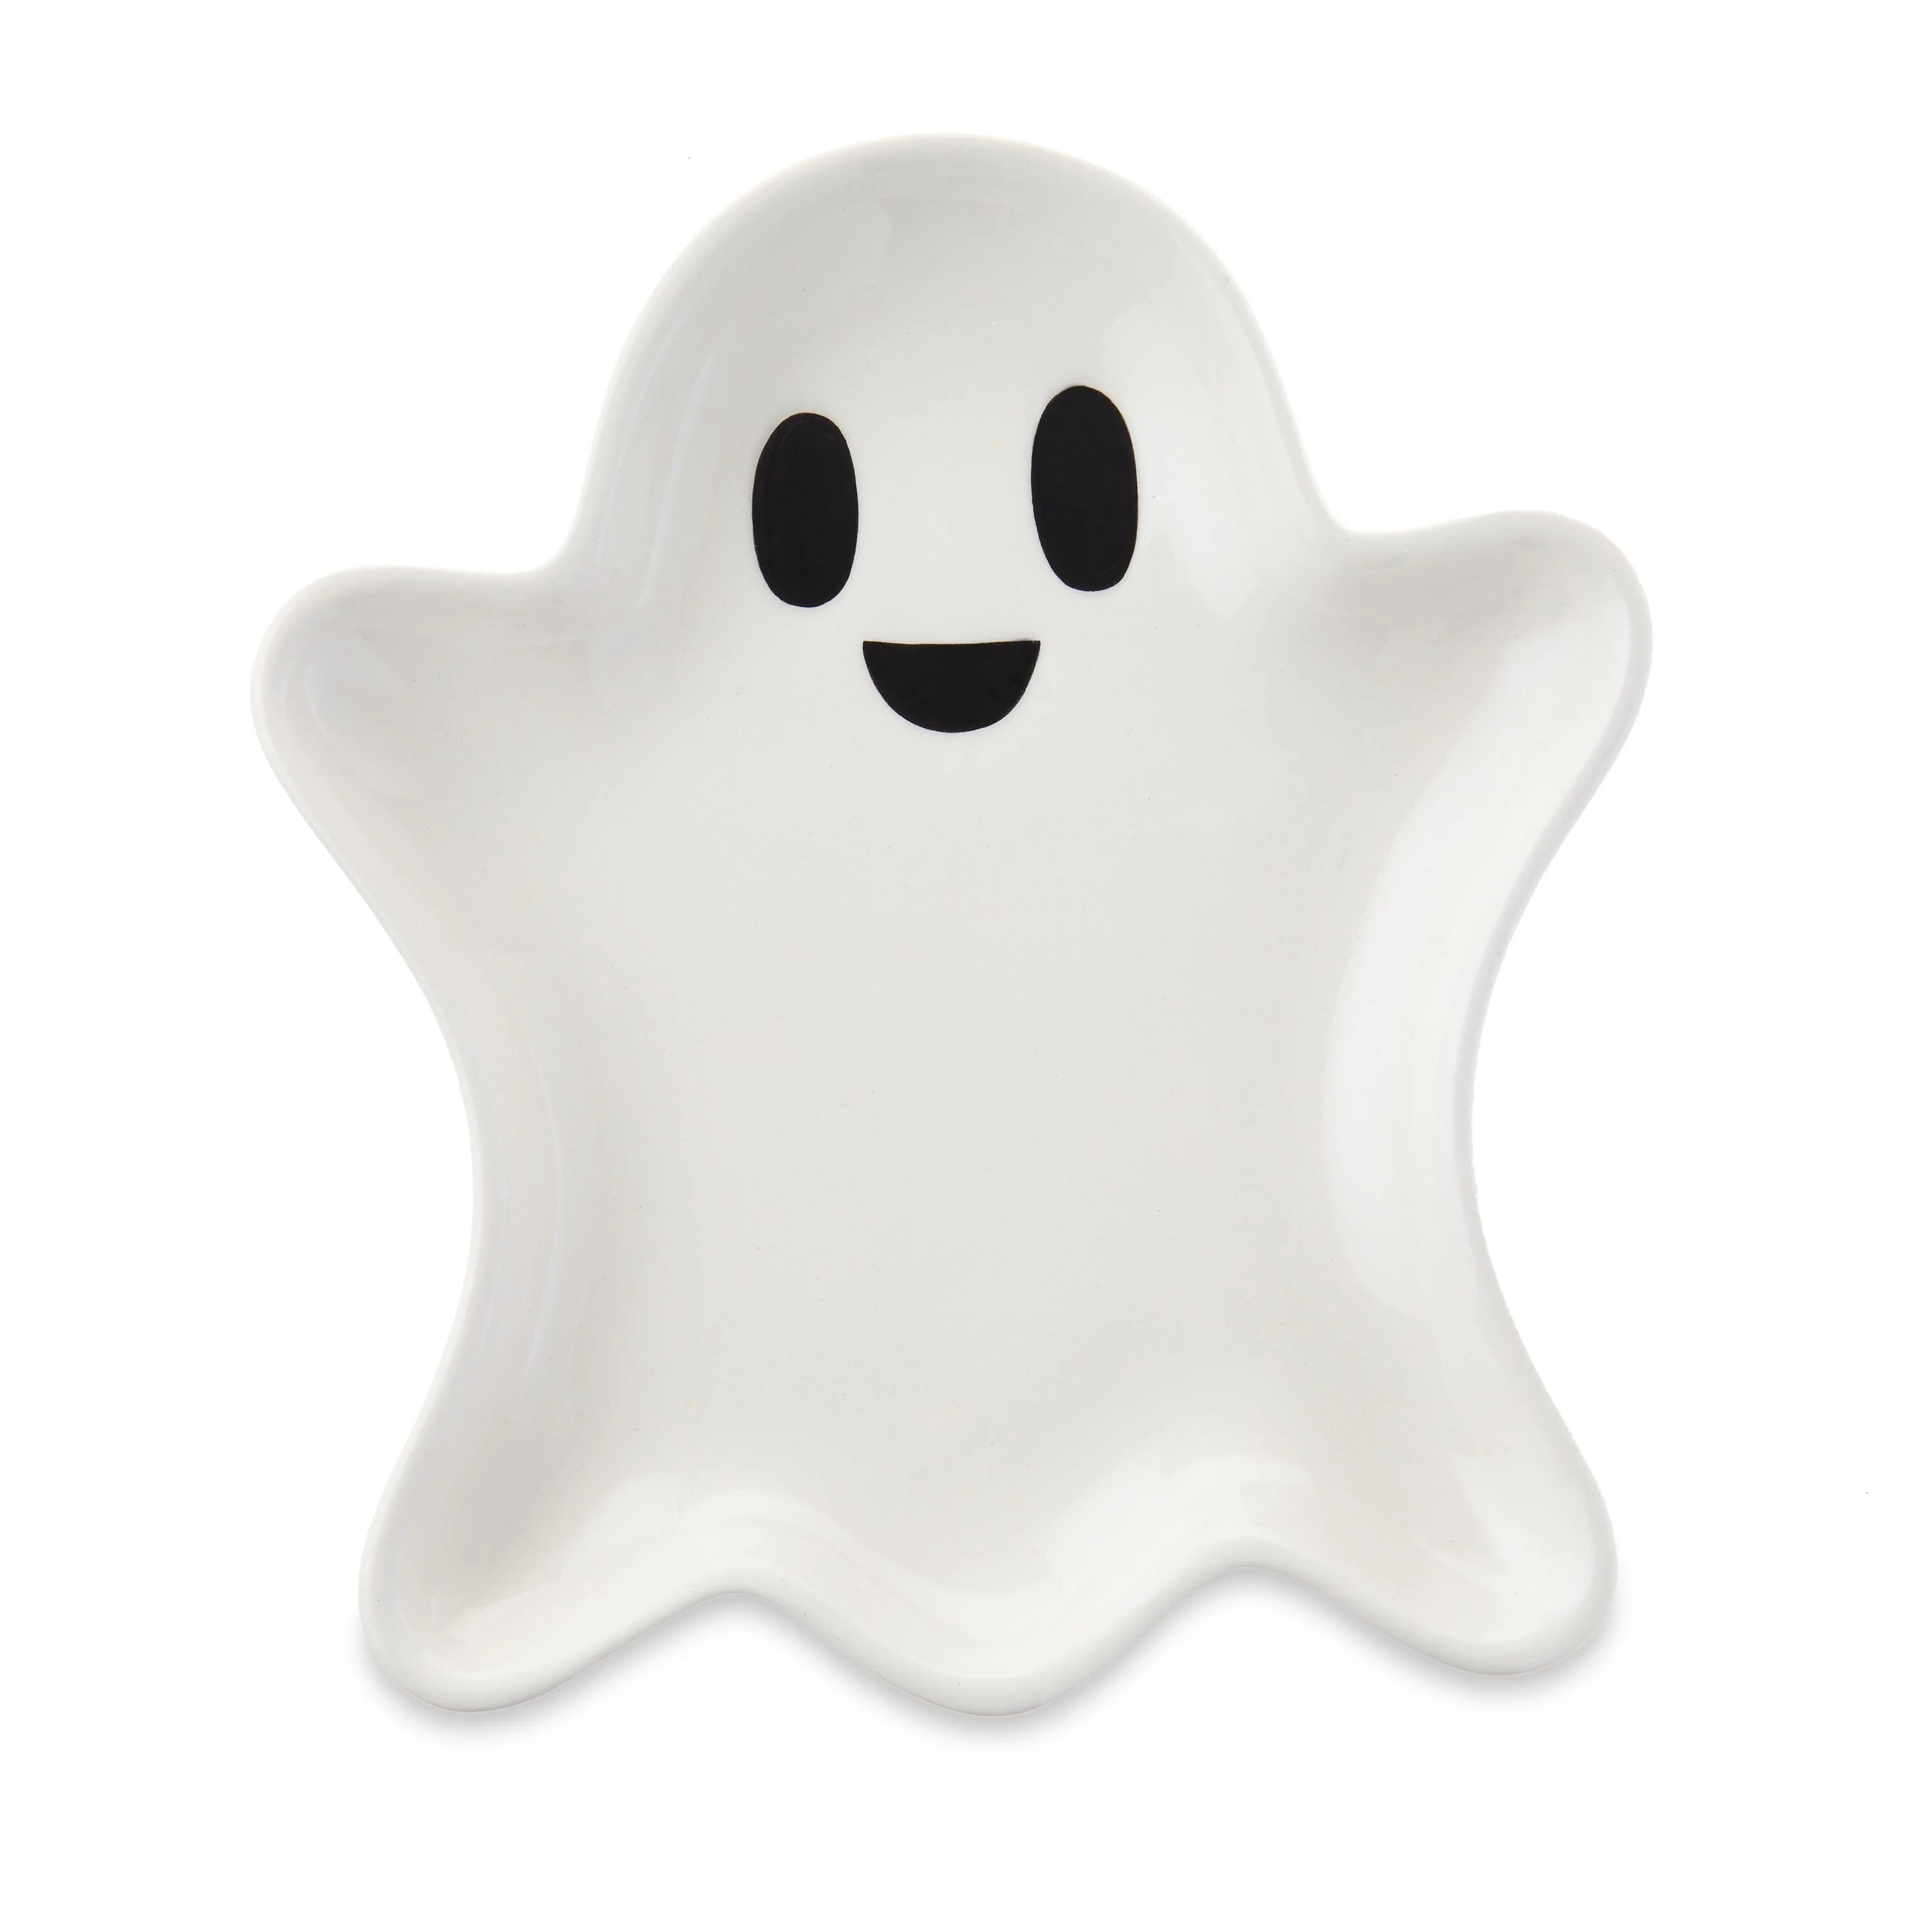 Way To Celebrate Halloween 6 Inch White Dolomite Ghost Dish Decoration | Walmart (US)